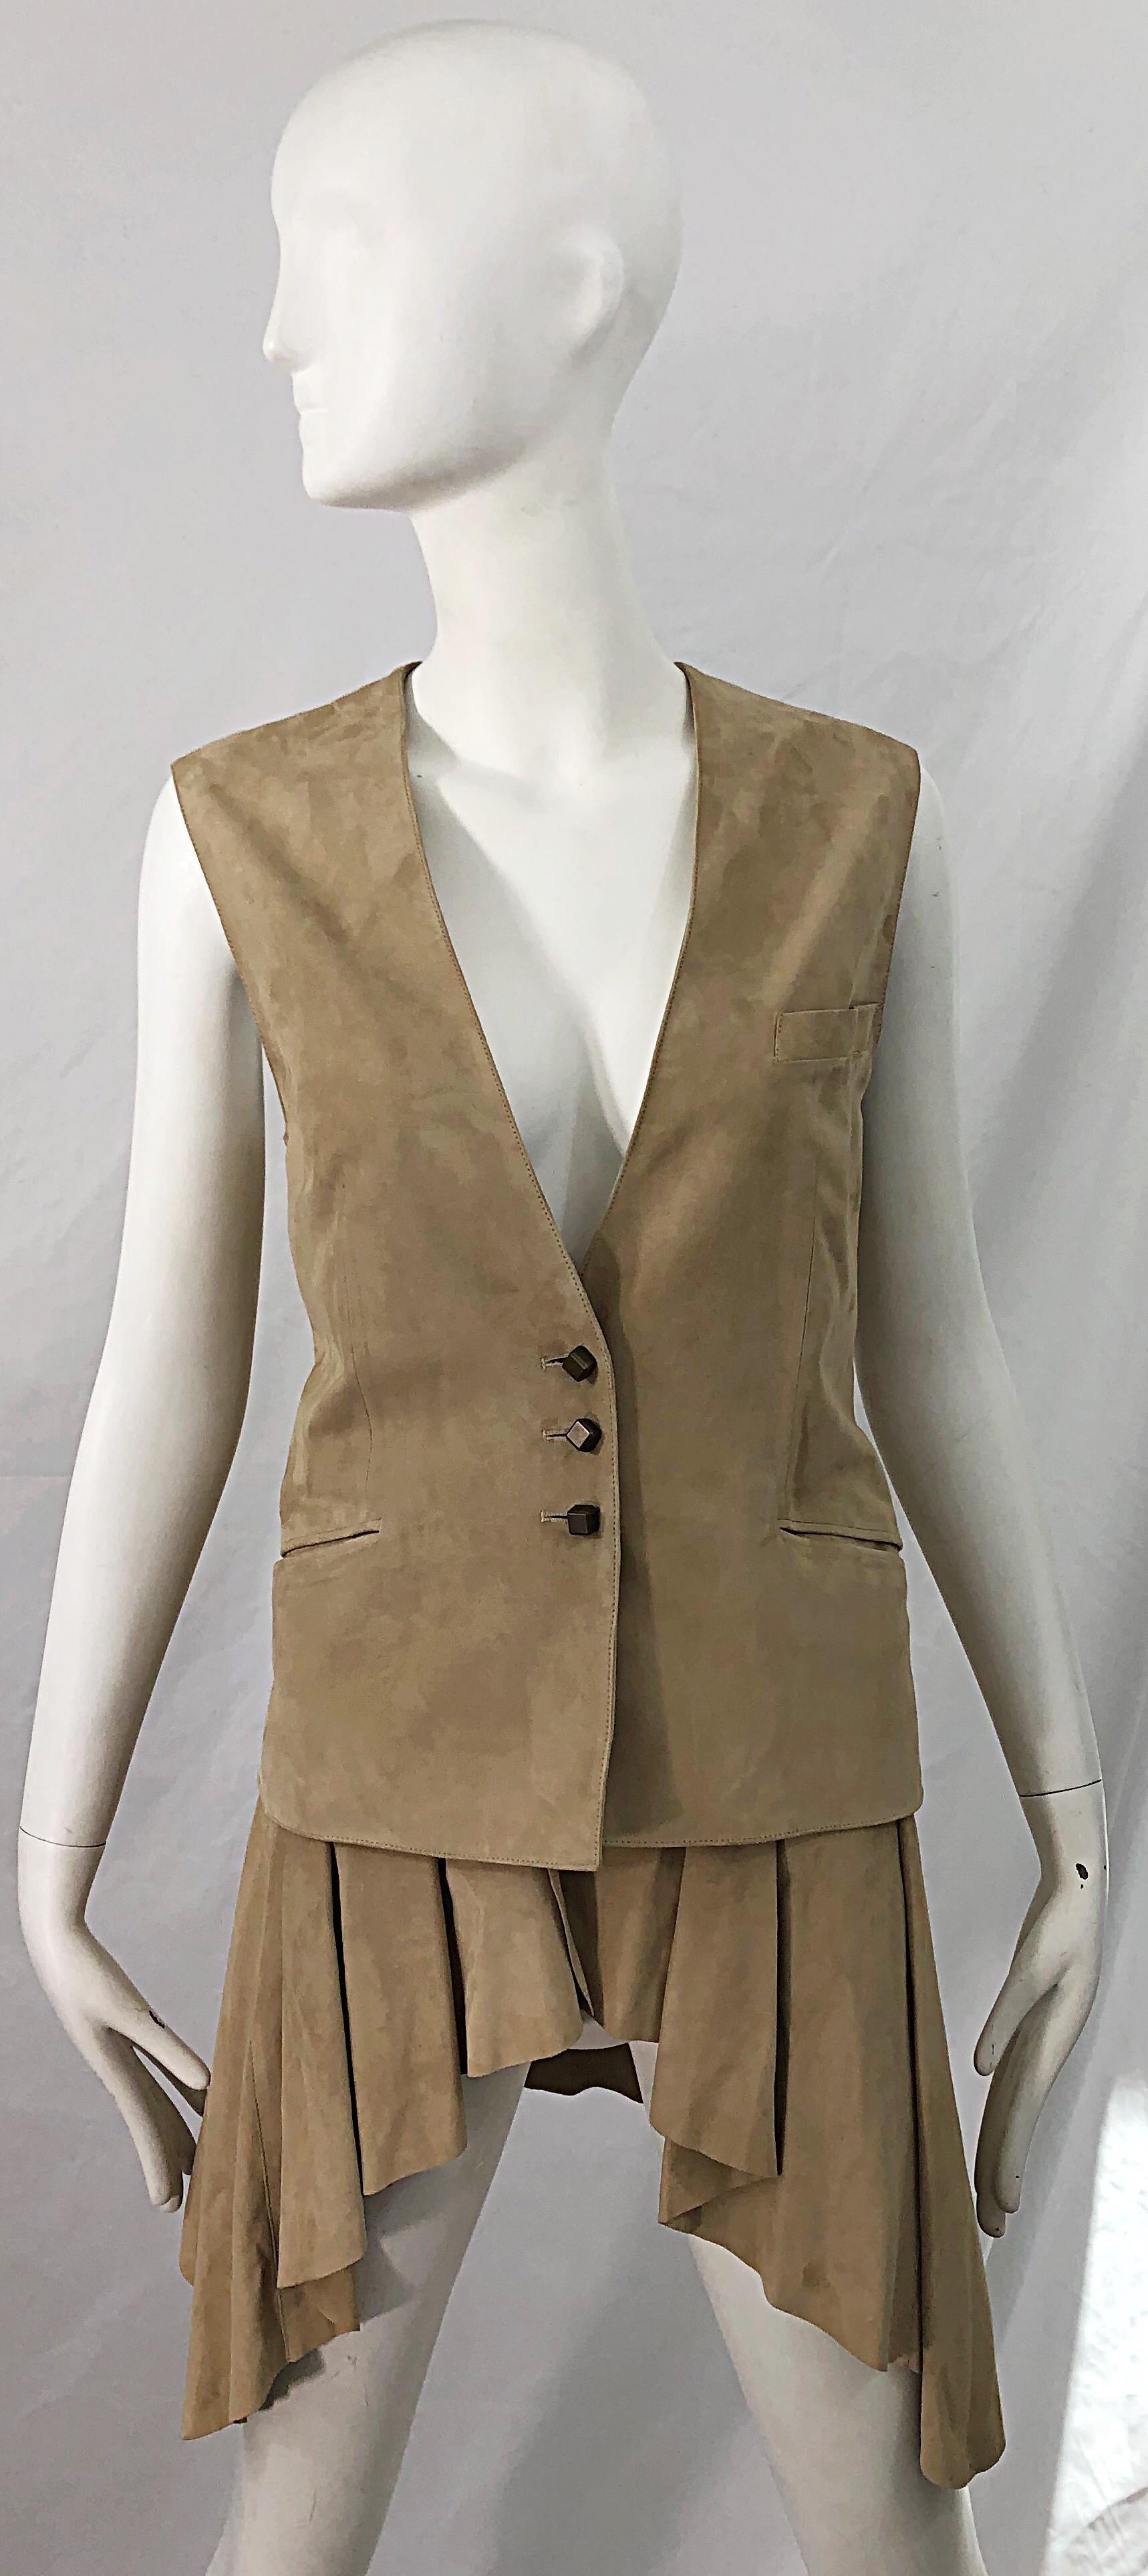 Emanuel Ungaro 1990s Tan Suede Leather Size 42 / 8 Dip Hem Vintage 90s Vest Top For Sale 6